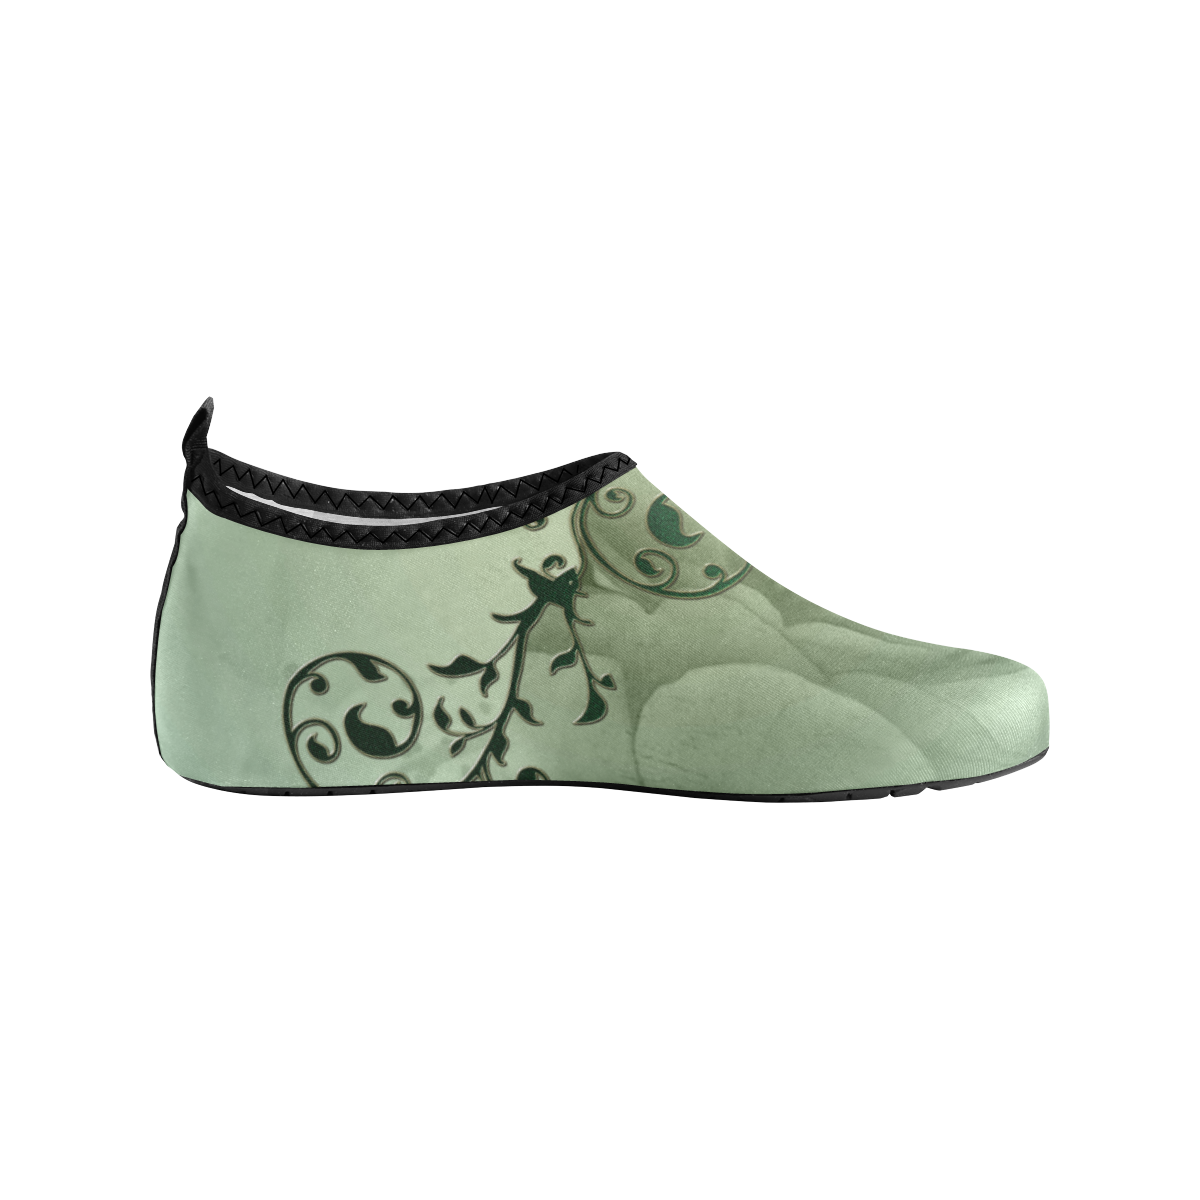 Wonderful flowers, soft green colors Men's Slip-On Water Shoes (Model 056)